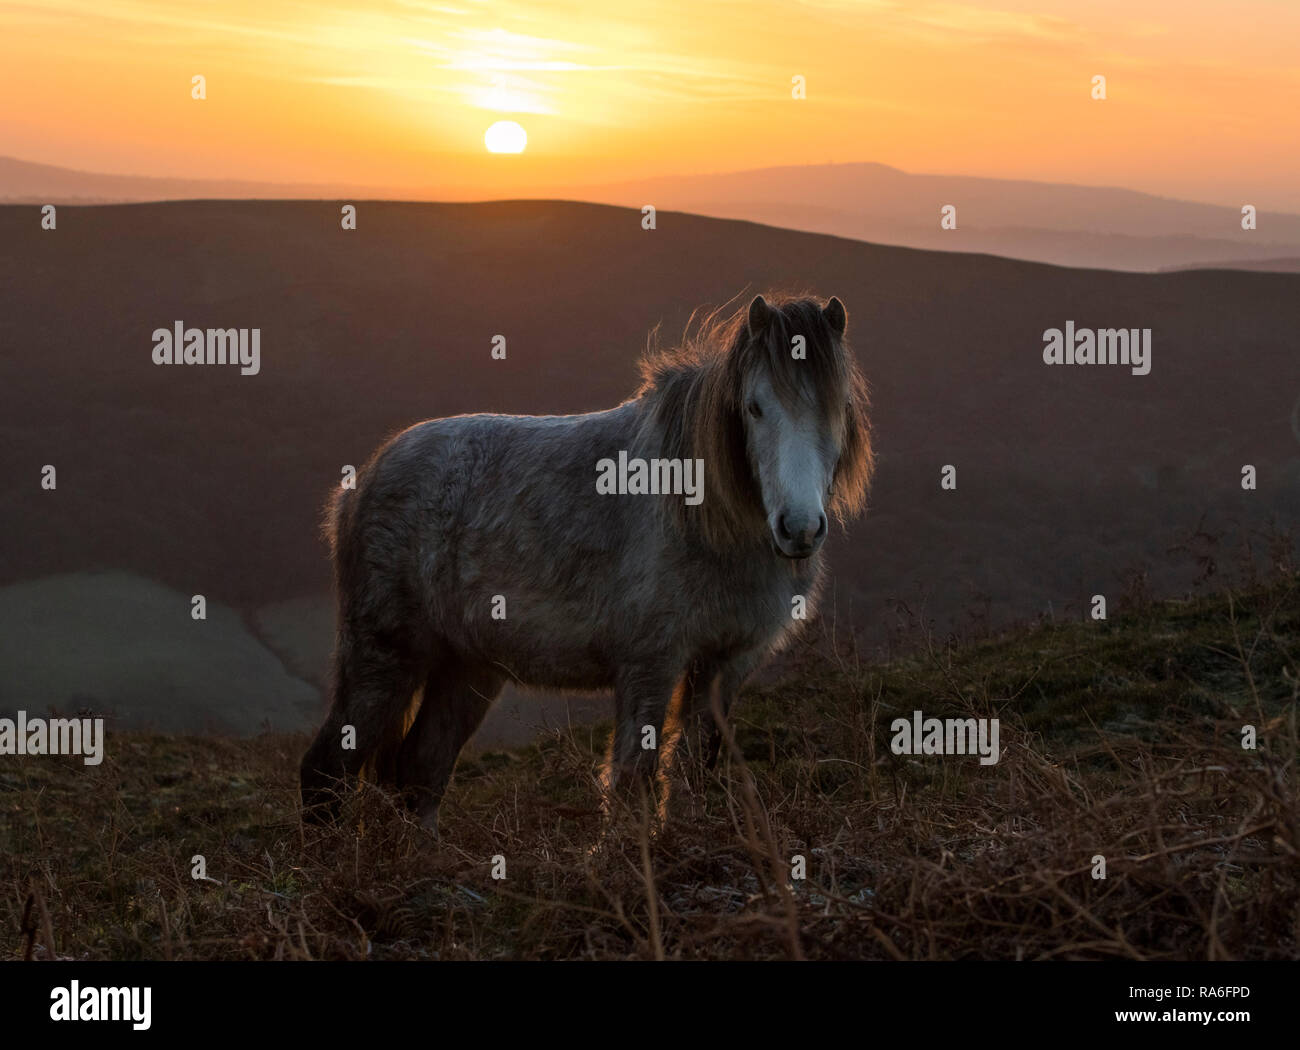 Long Mynd, Church Stretton, Shropshire, UK. 2nd Jan, 2019. Wild pony at sunrise on the Long Mynd. Credit: John Hayward/Alamy Live News Stock Photo